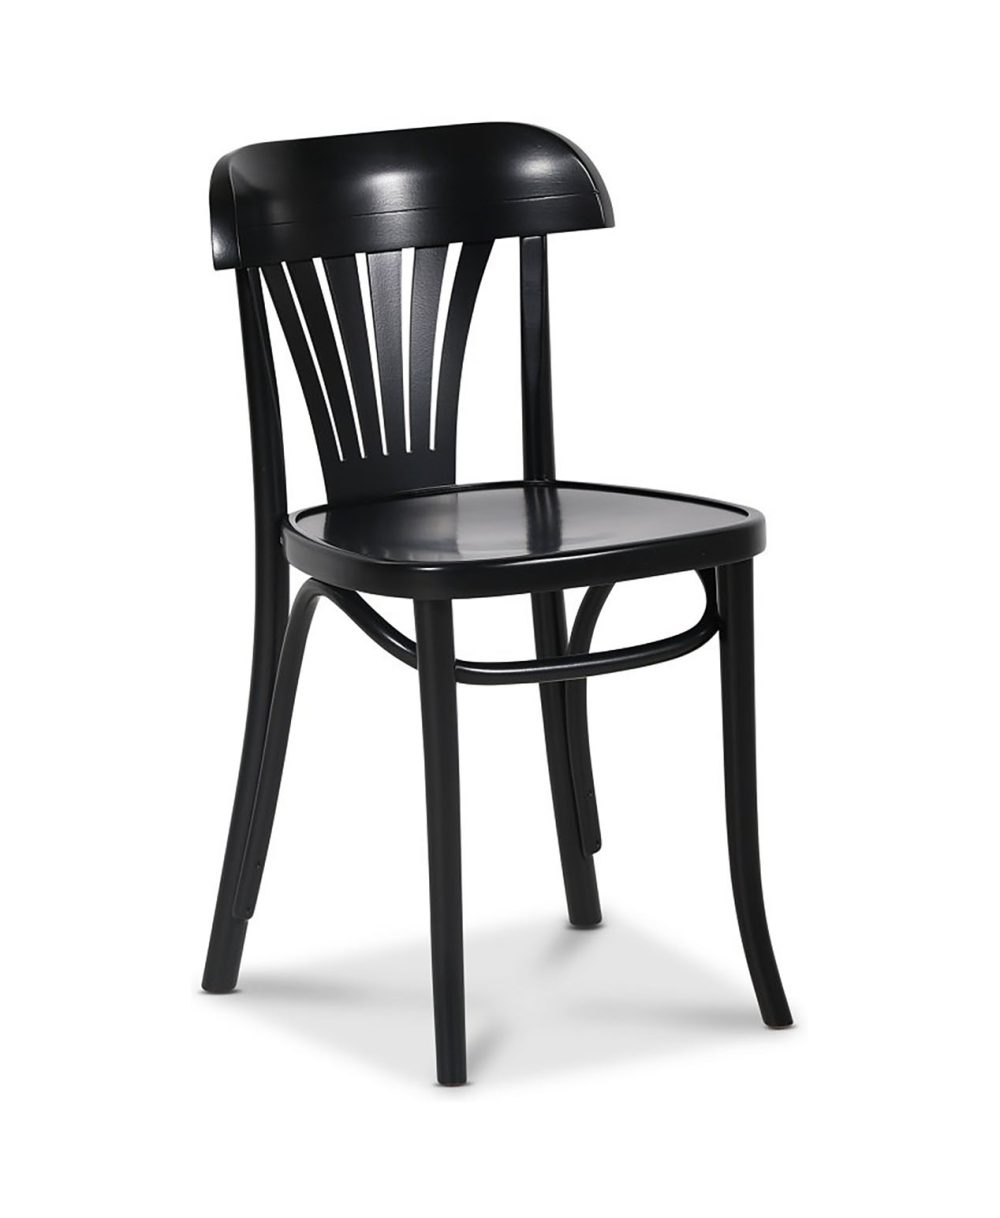 chair-no24-black-profile.jpg